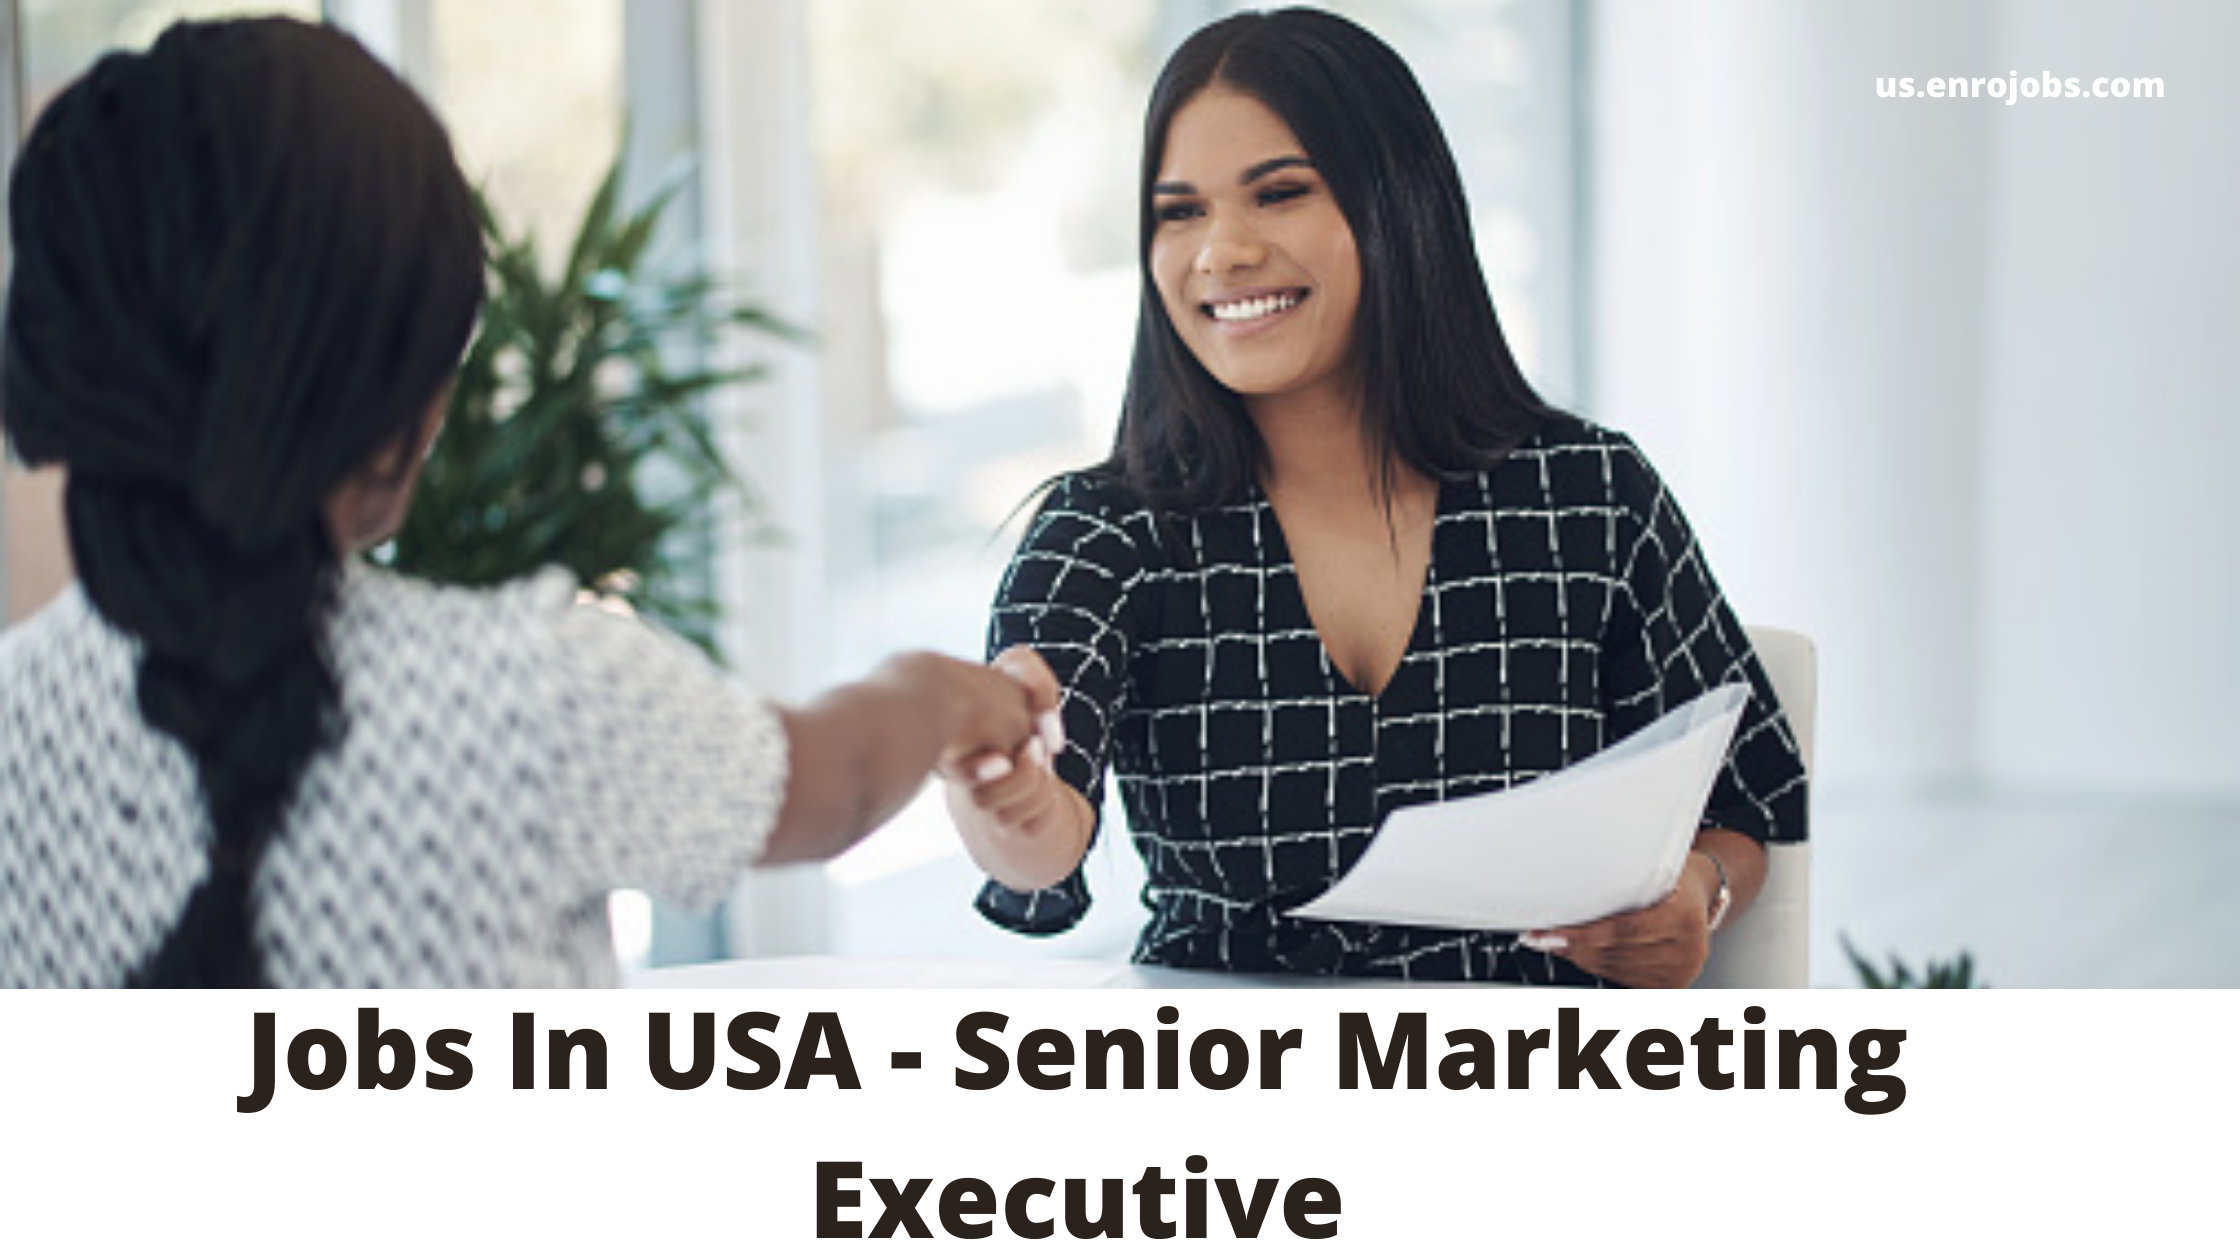 Jobs In USA - Senior Marketing Executive